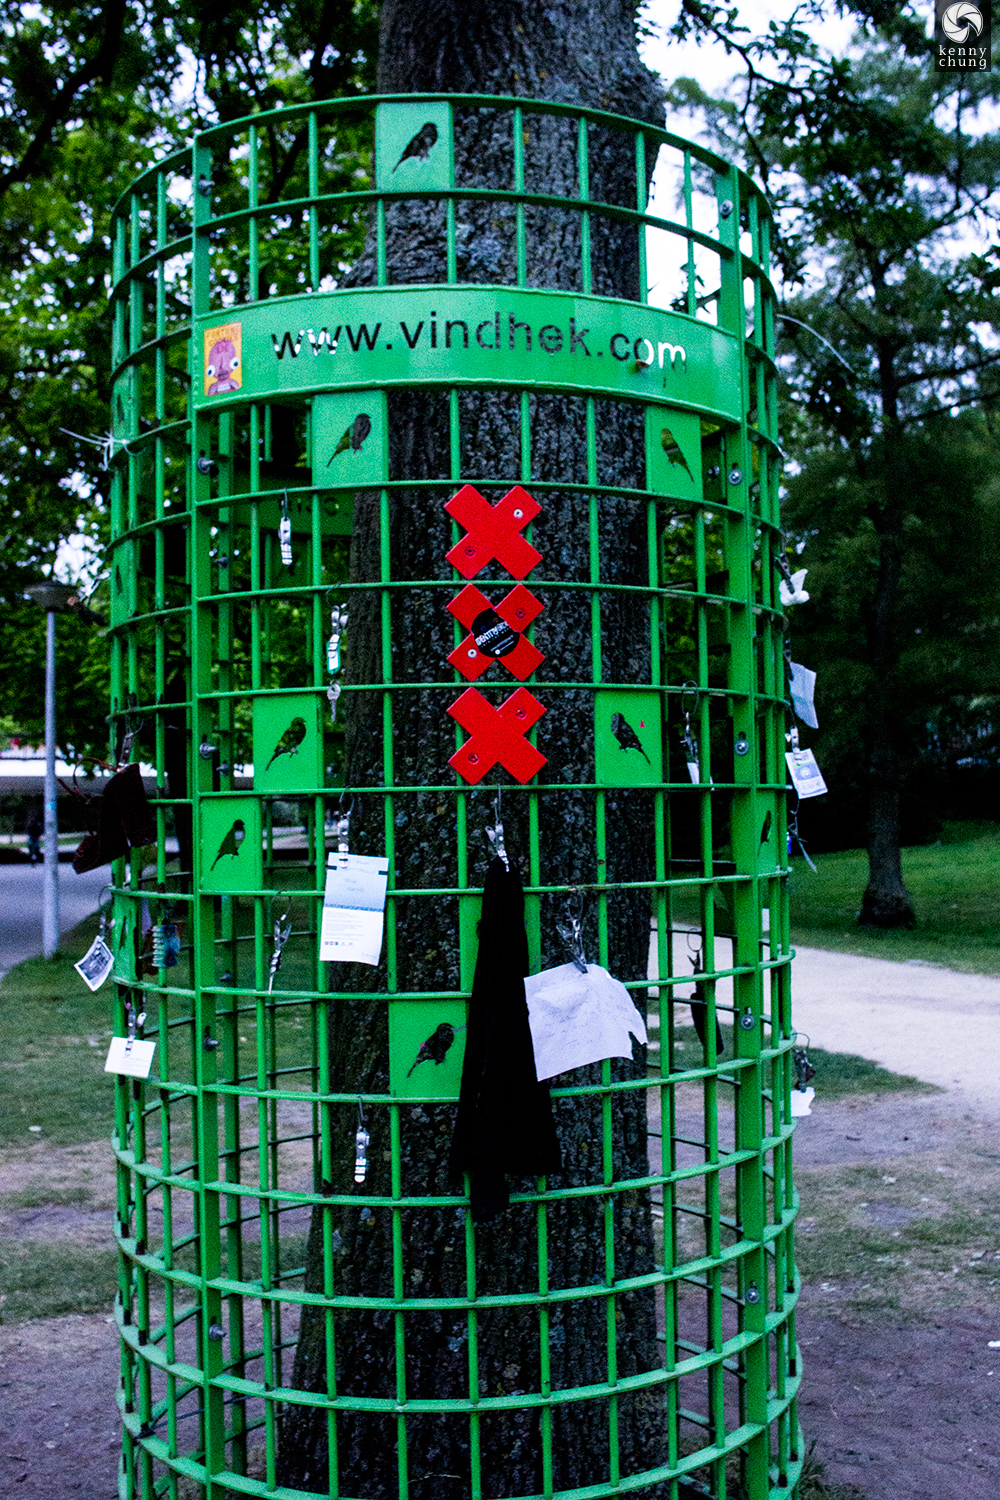 Vindhek tree fence in Vondelpark, Amsterdam